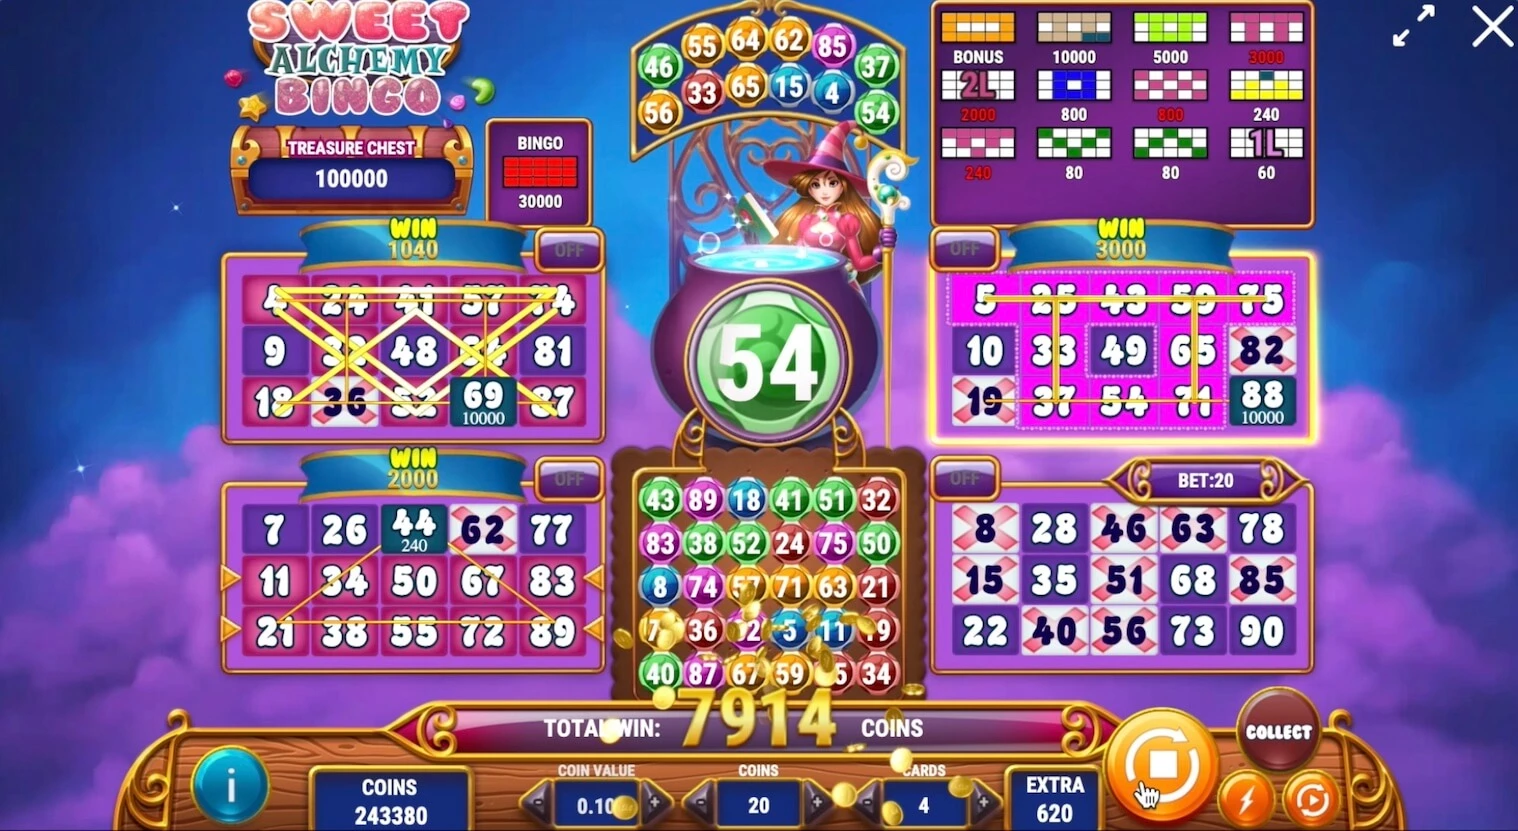 Sweet Alchemy bingo win 7914 dollars